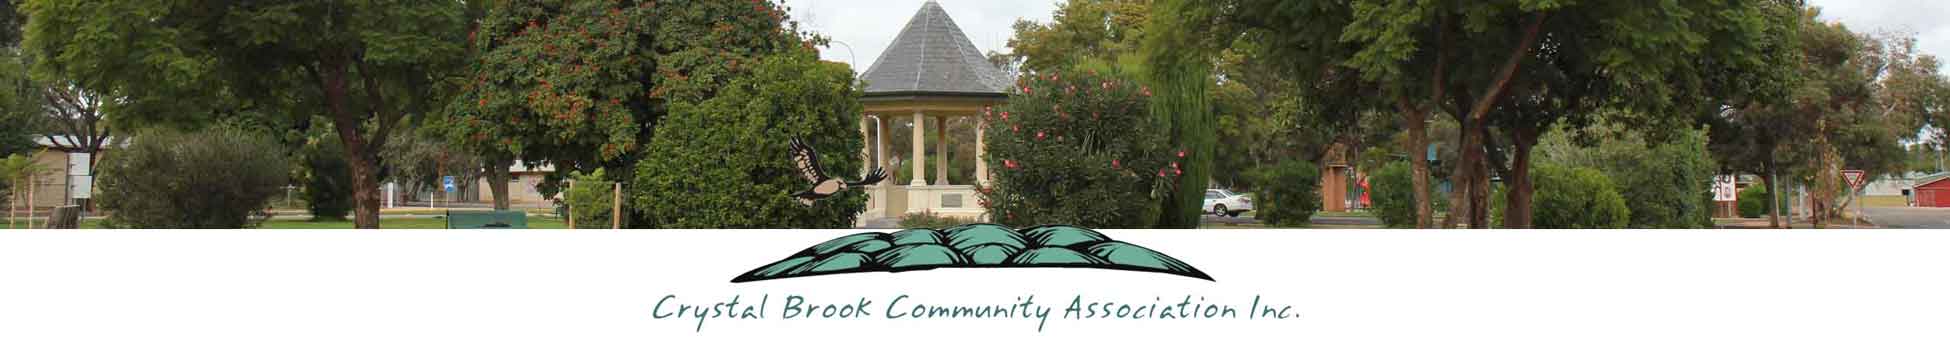 Crystal Brook Community Association